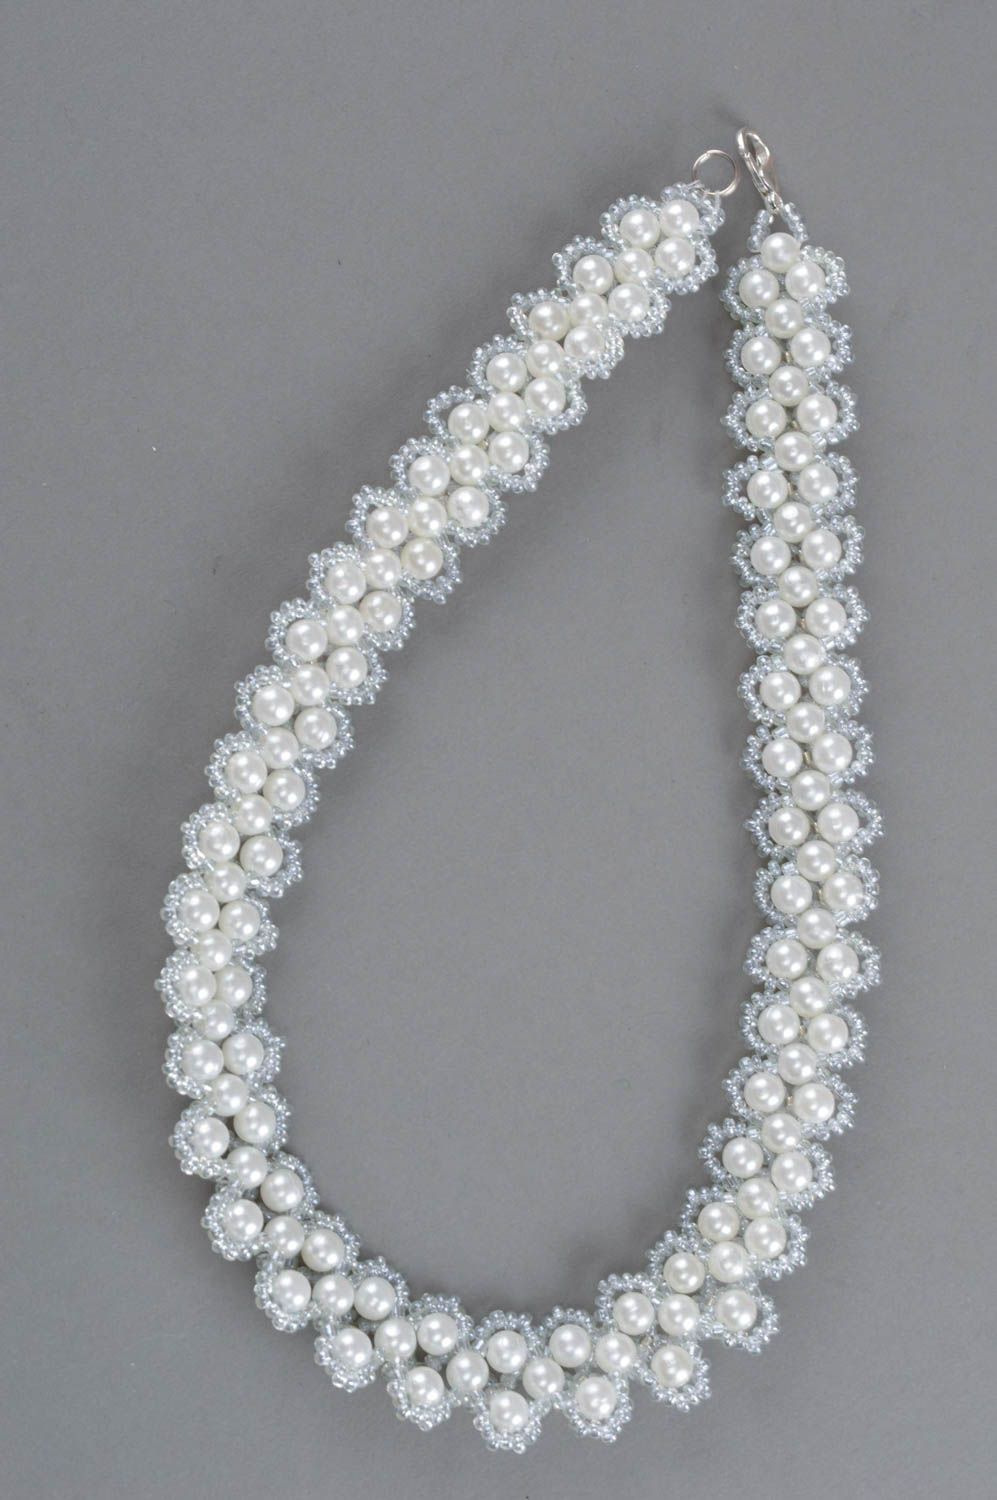 Handmade necklace white bead jewelry designer aсcessory female jewelry photo 2